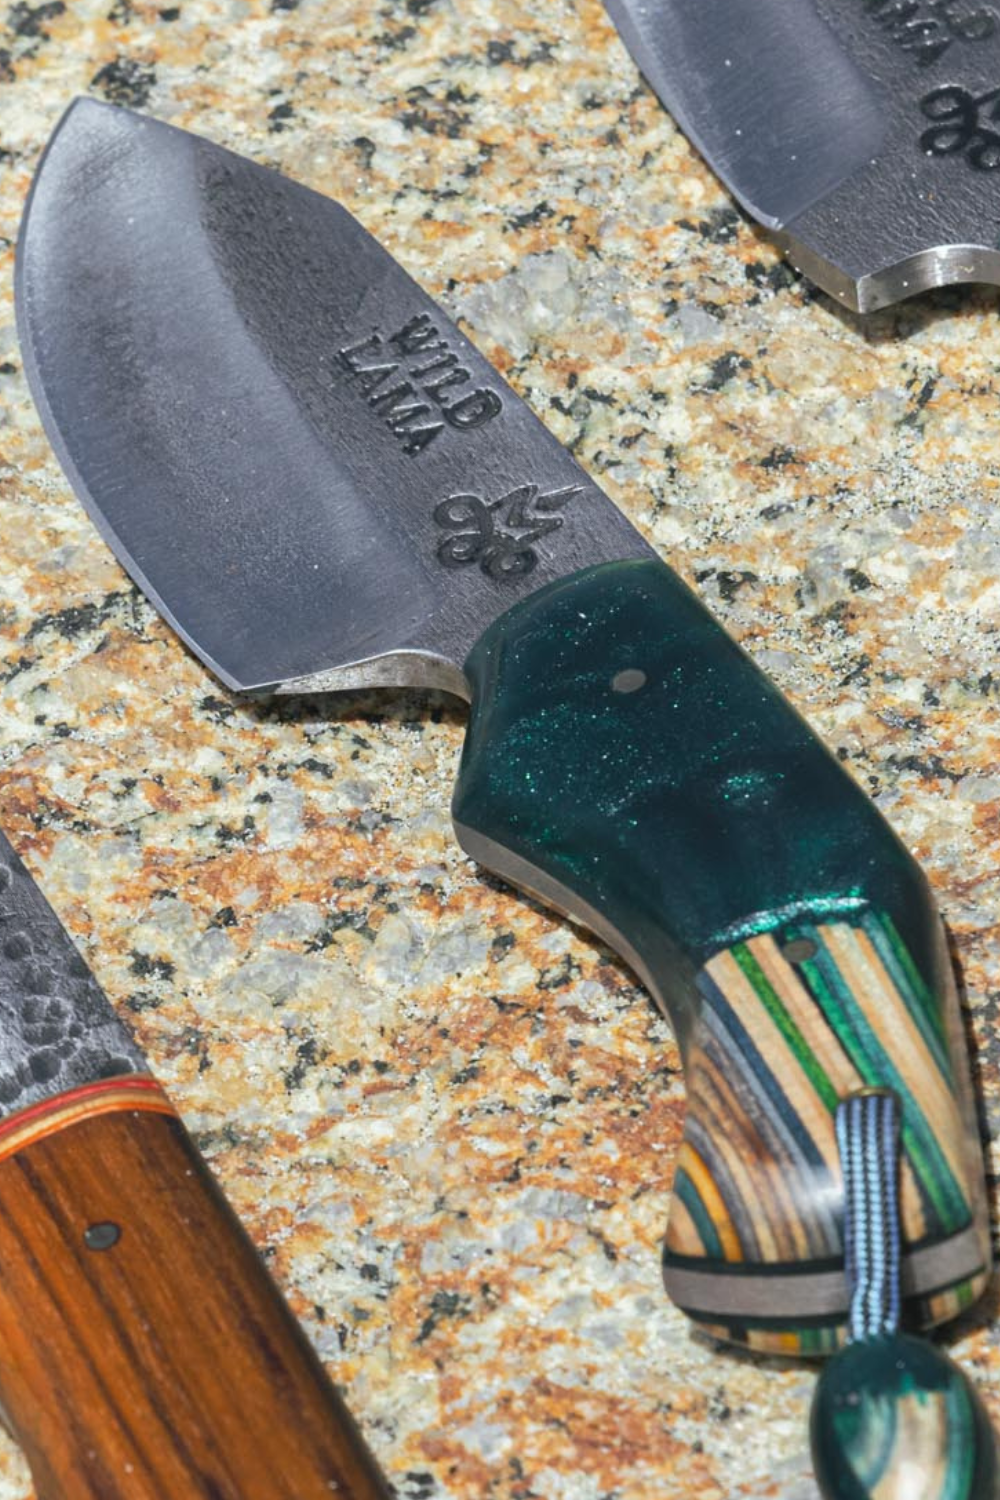 Cuchillo Reciclado EDC x Mantra Knives | Wild Lama